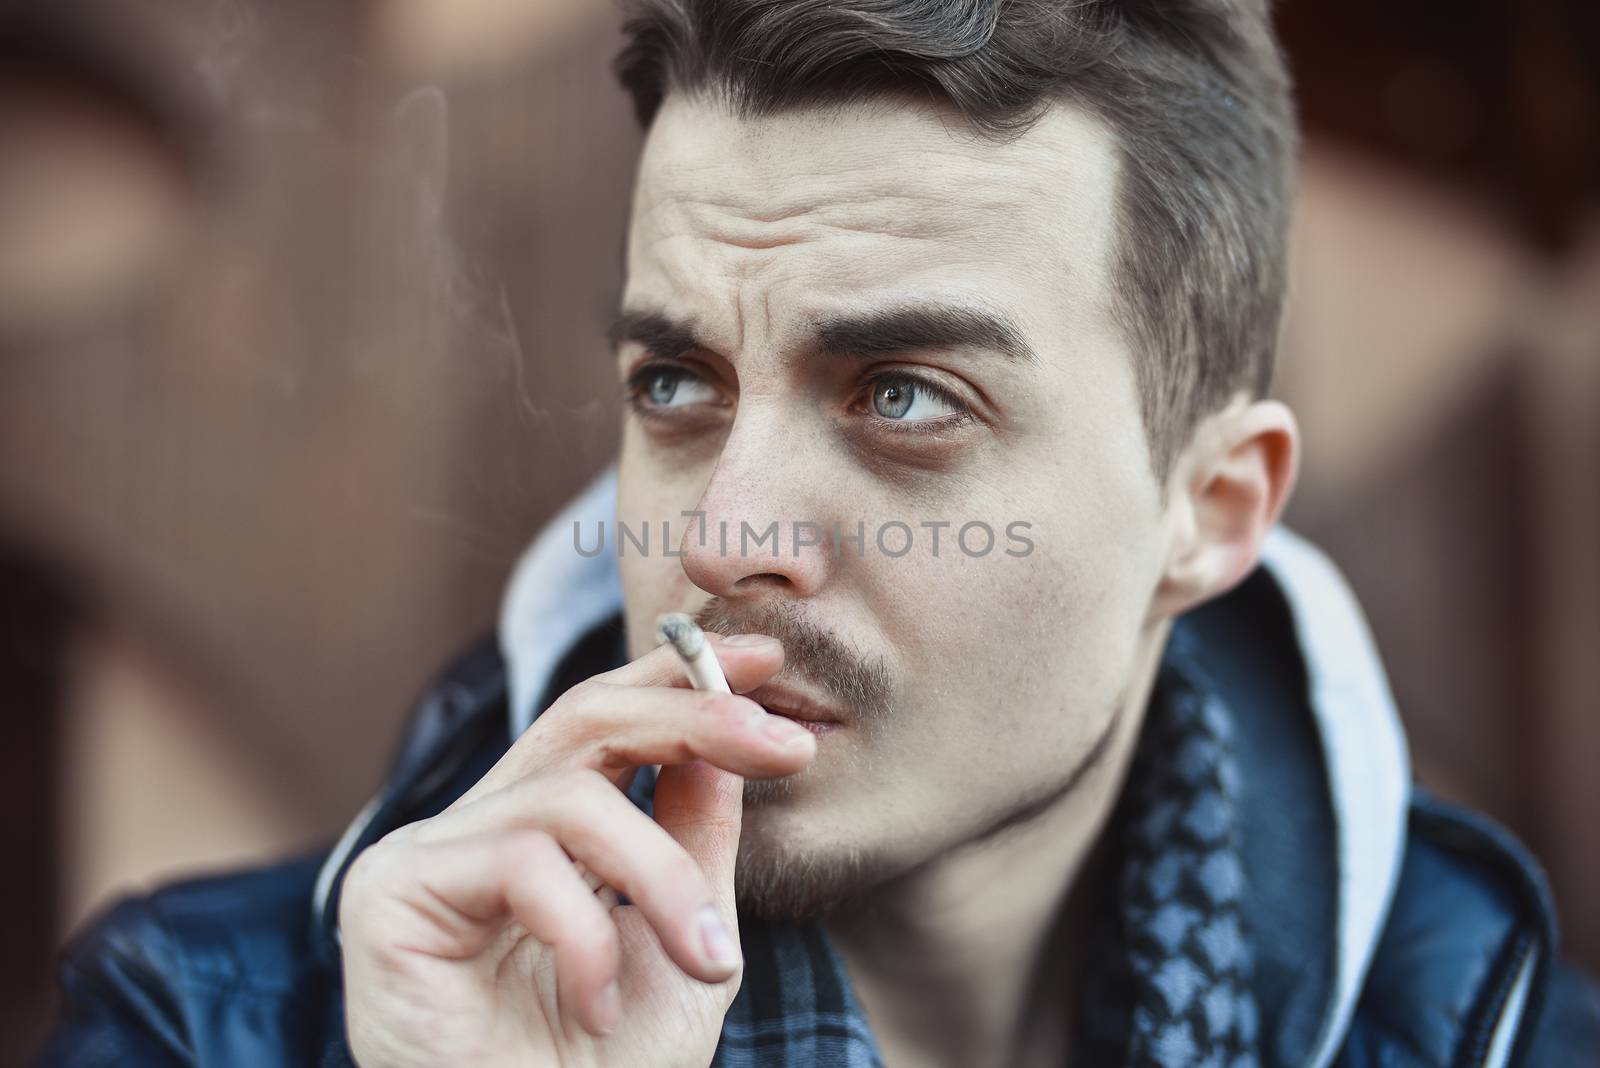 Man smoking cigarette Close up of an smoking cigarette